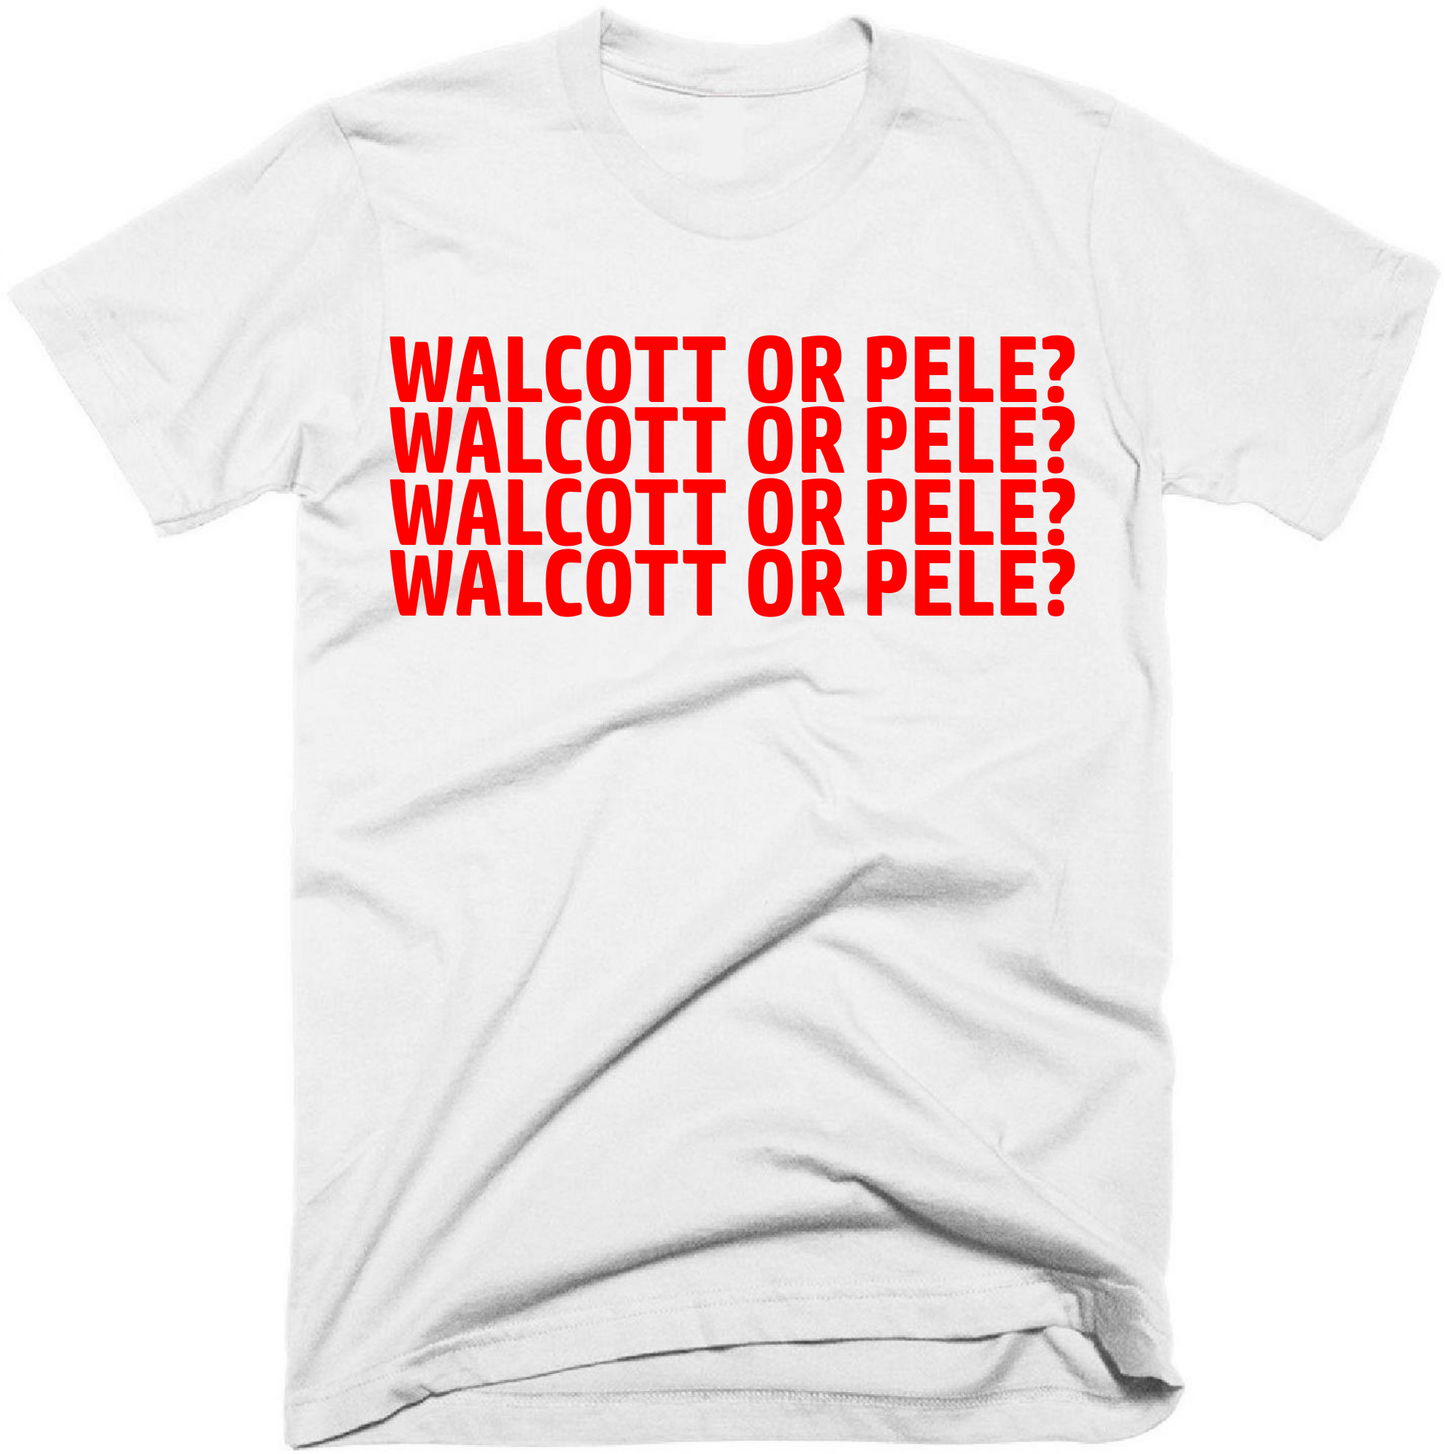 Walcott or Pele? - Large Print T-Shirt